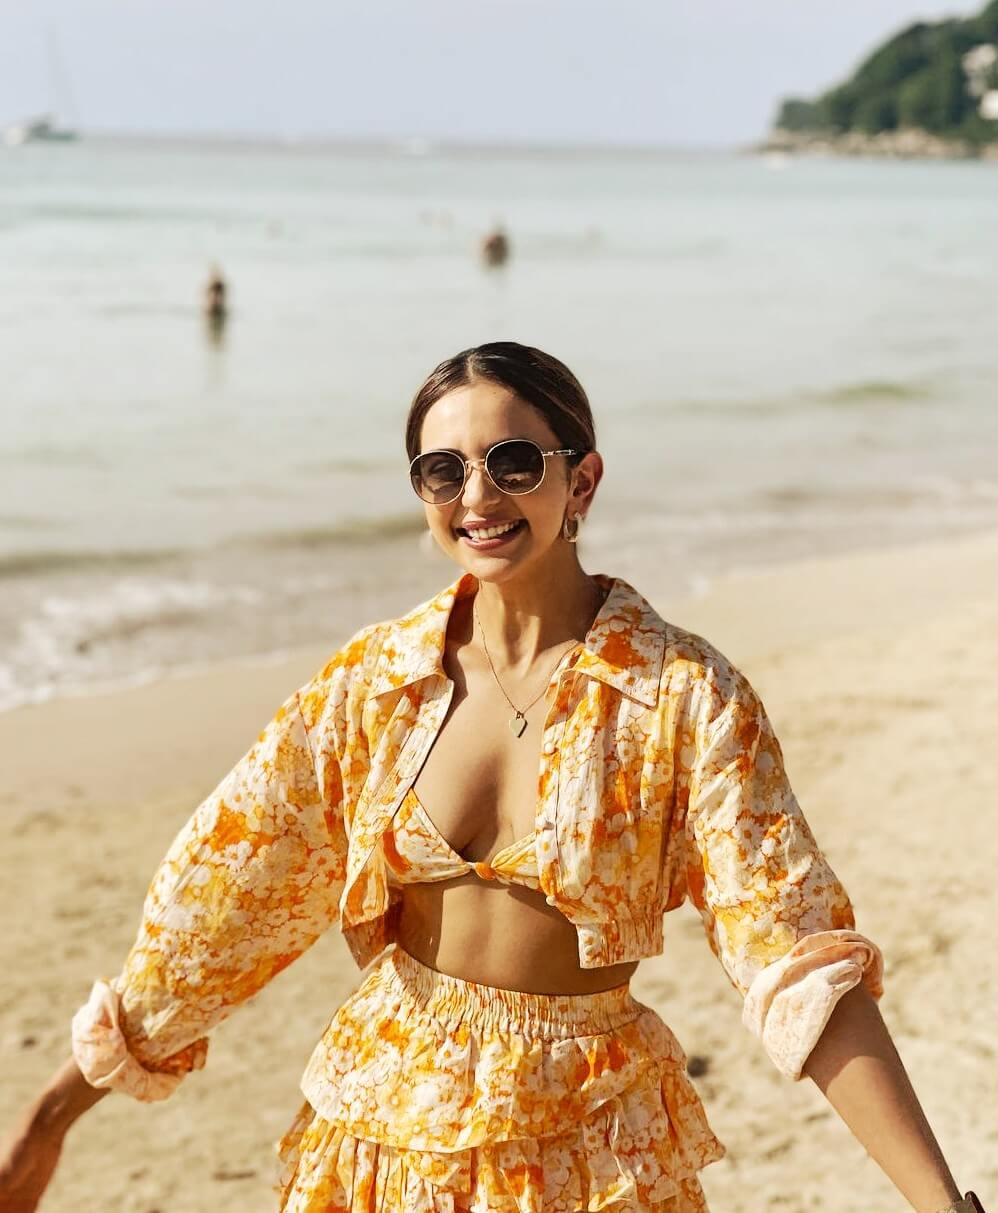 rakul preet singh boobs showing in beach dress